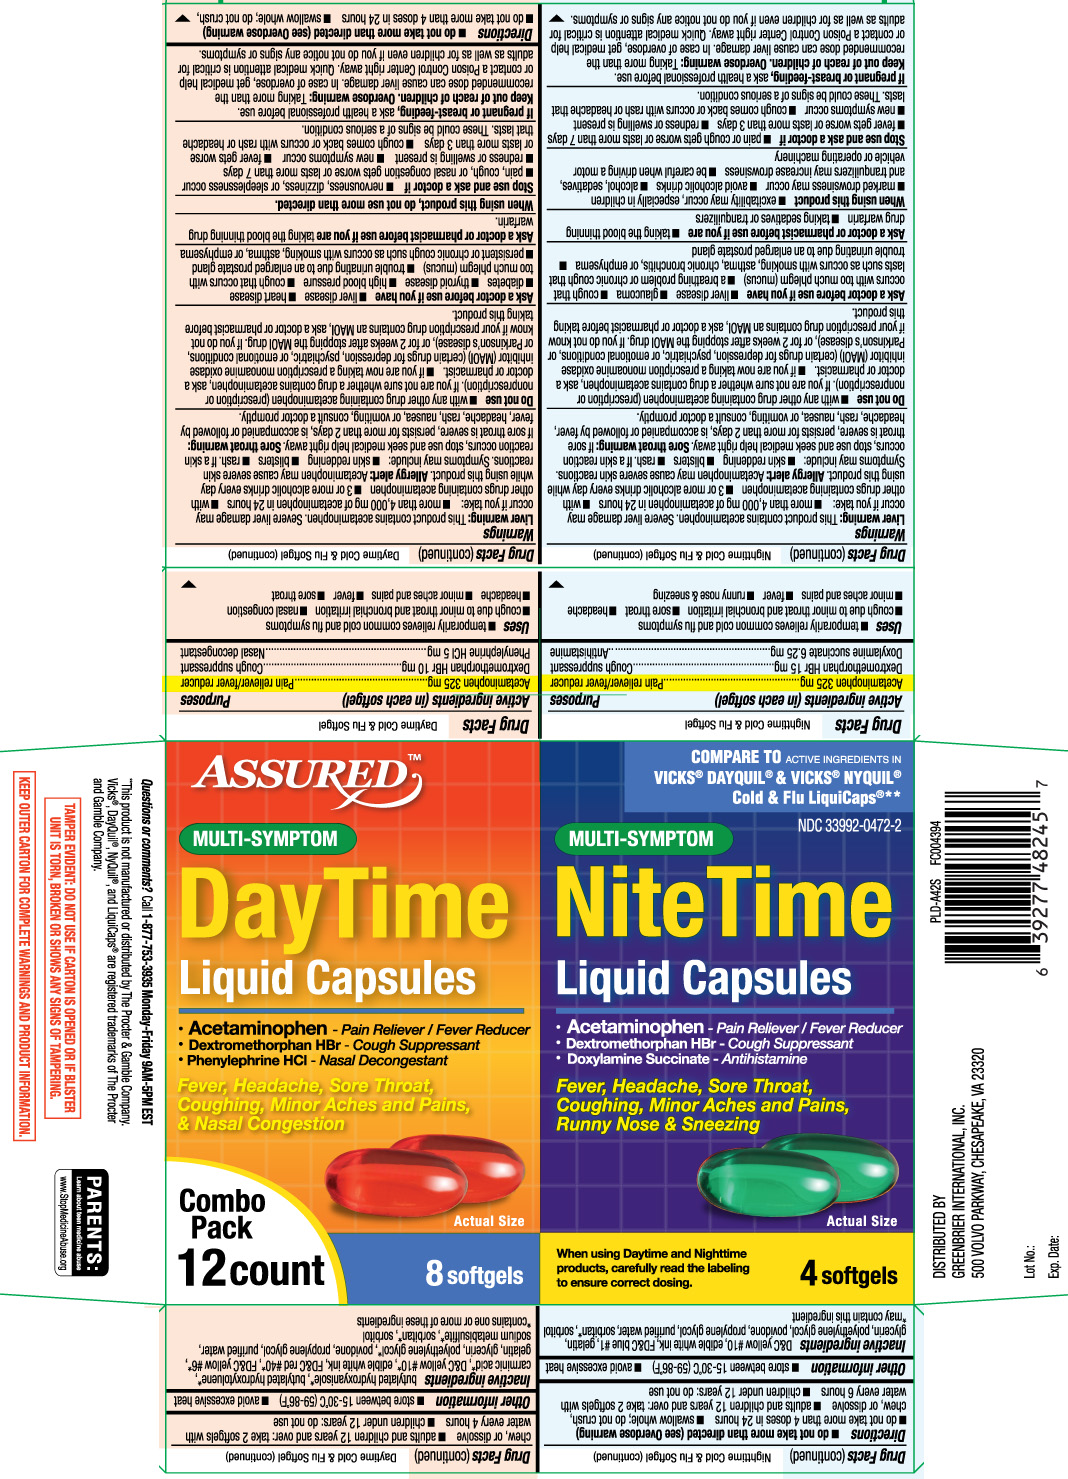 DAYTIME: Acetaminophen 325 mg, Dextromethorphan HBr 10 mg Phenylephrine HCI 5 mg NIGHTTIME Acetaminophen 325 mg, Dextromethorphan HBr 15mg Doxylamine Succinate 6.25mg